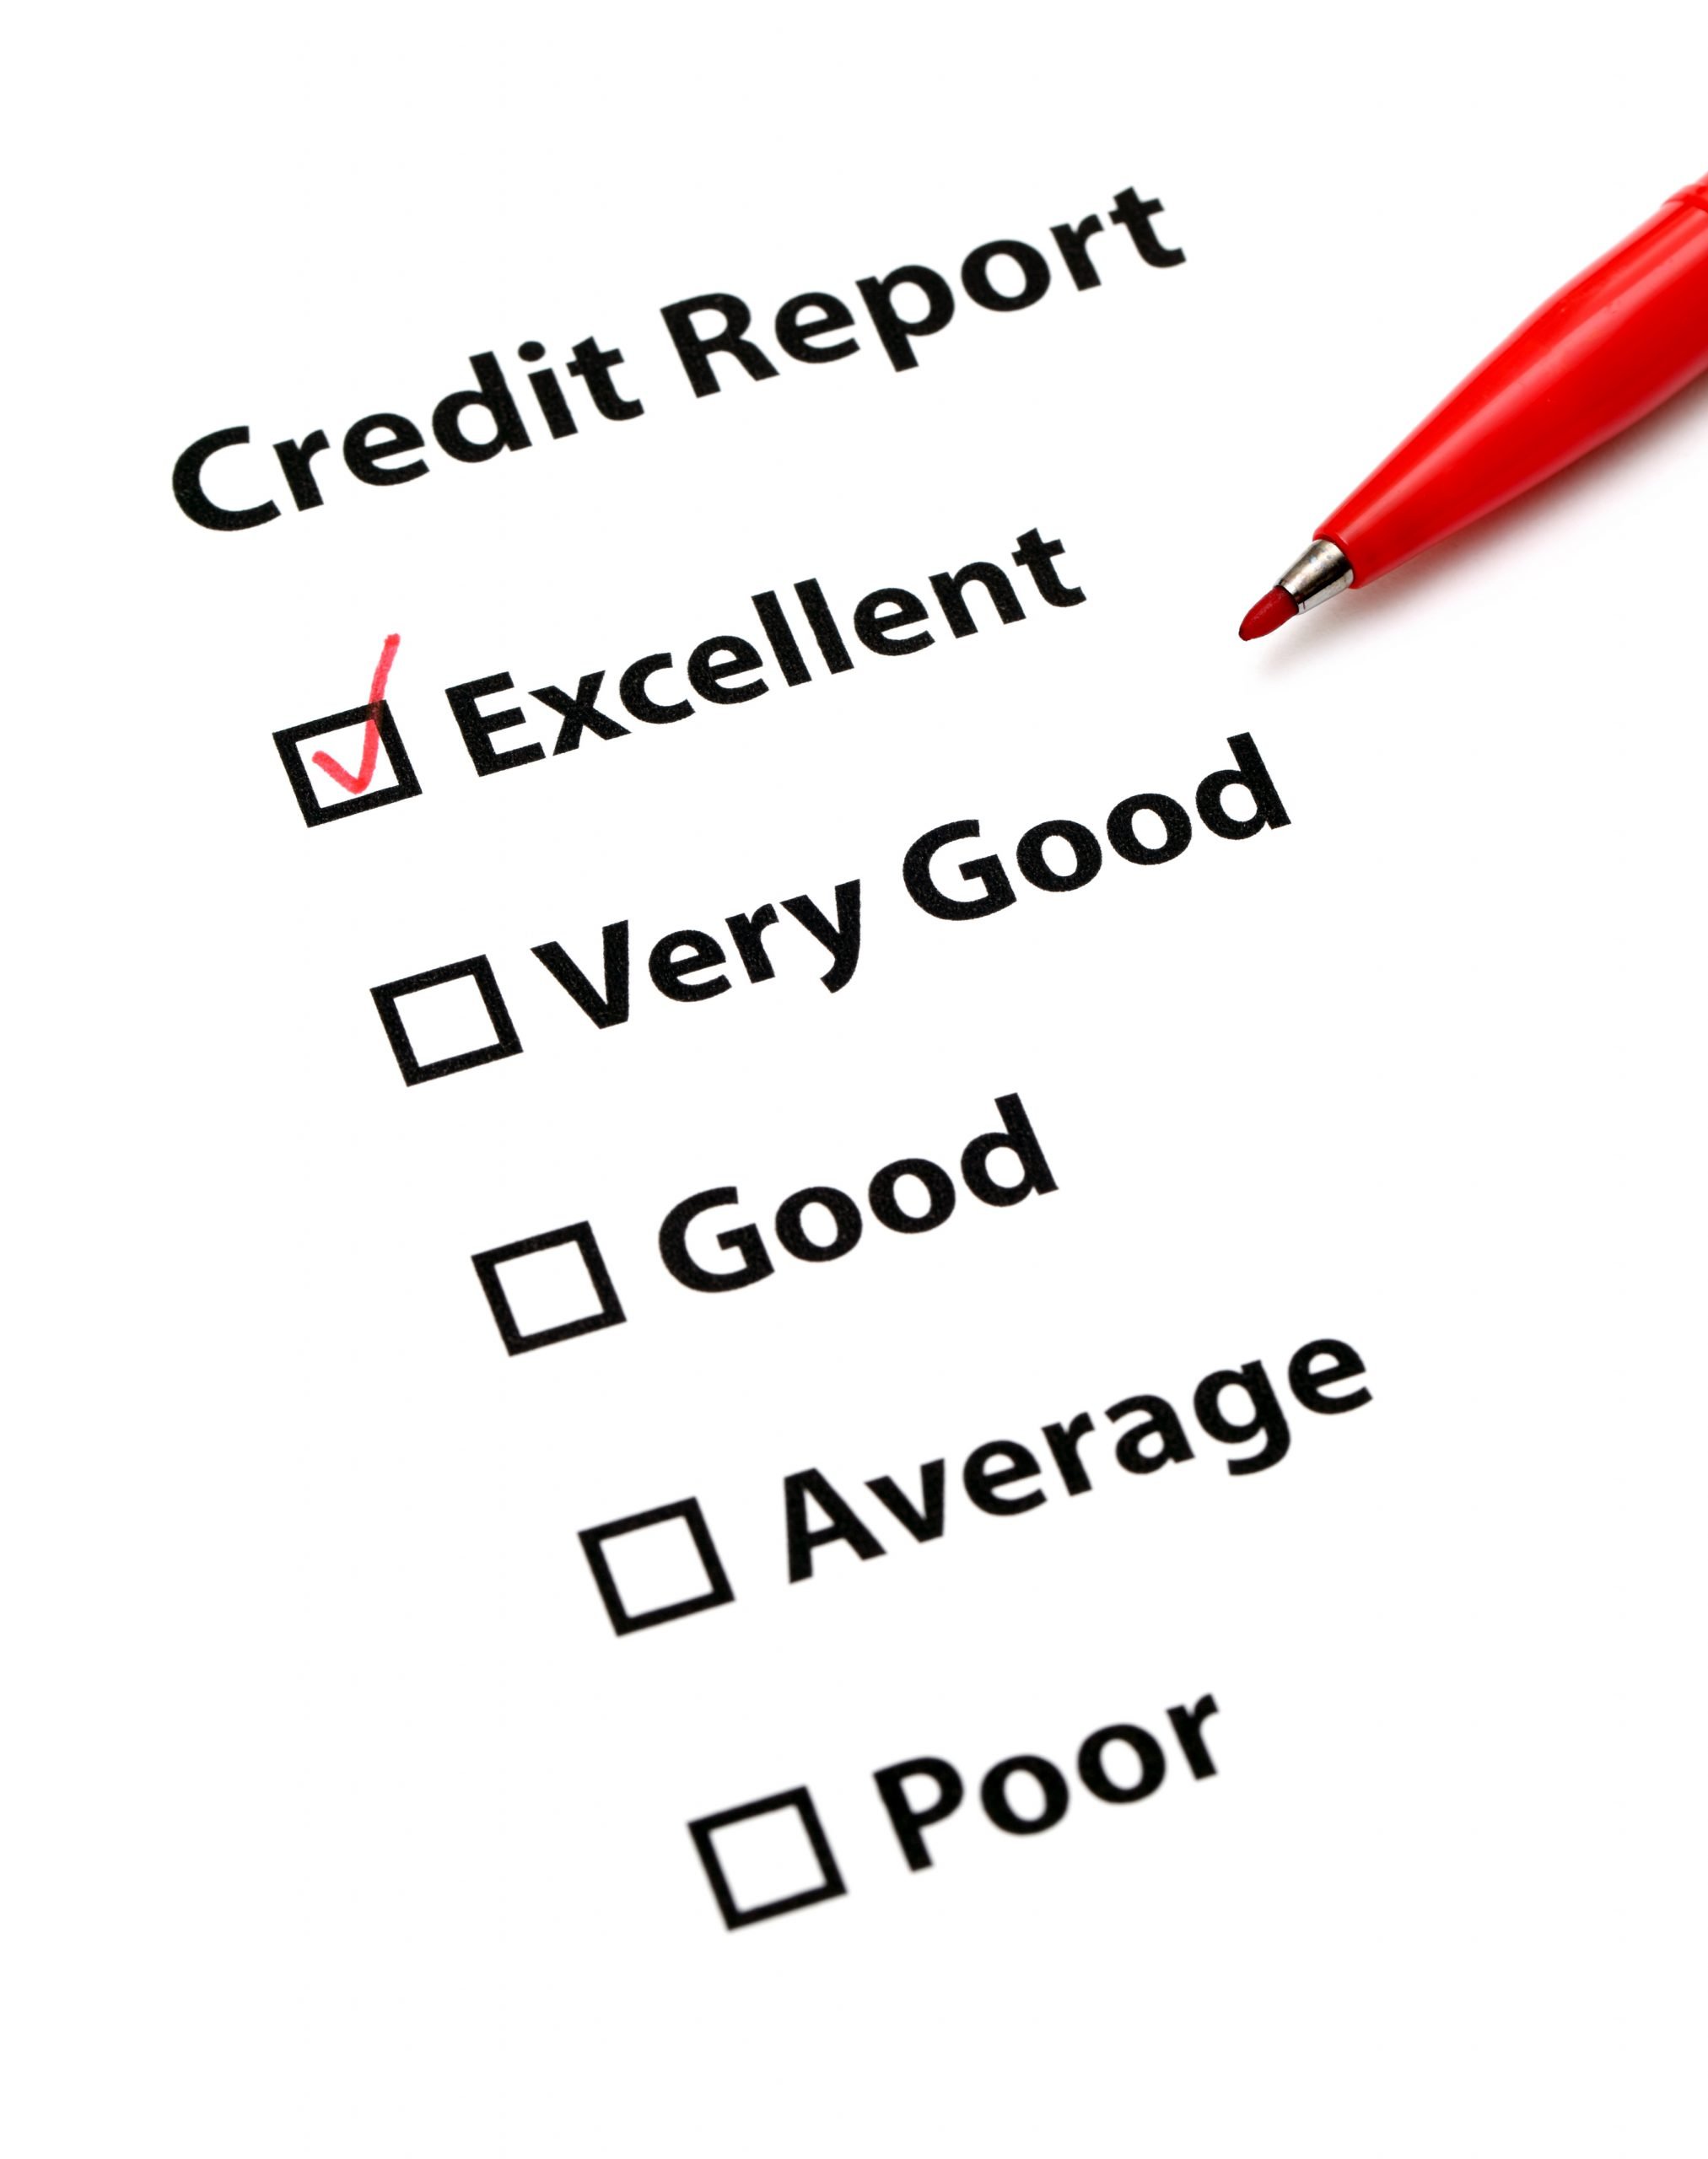 Credit report, excellent score